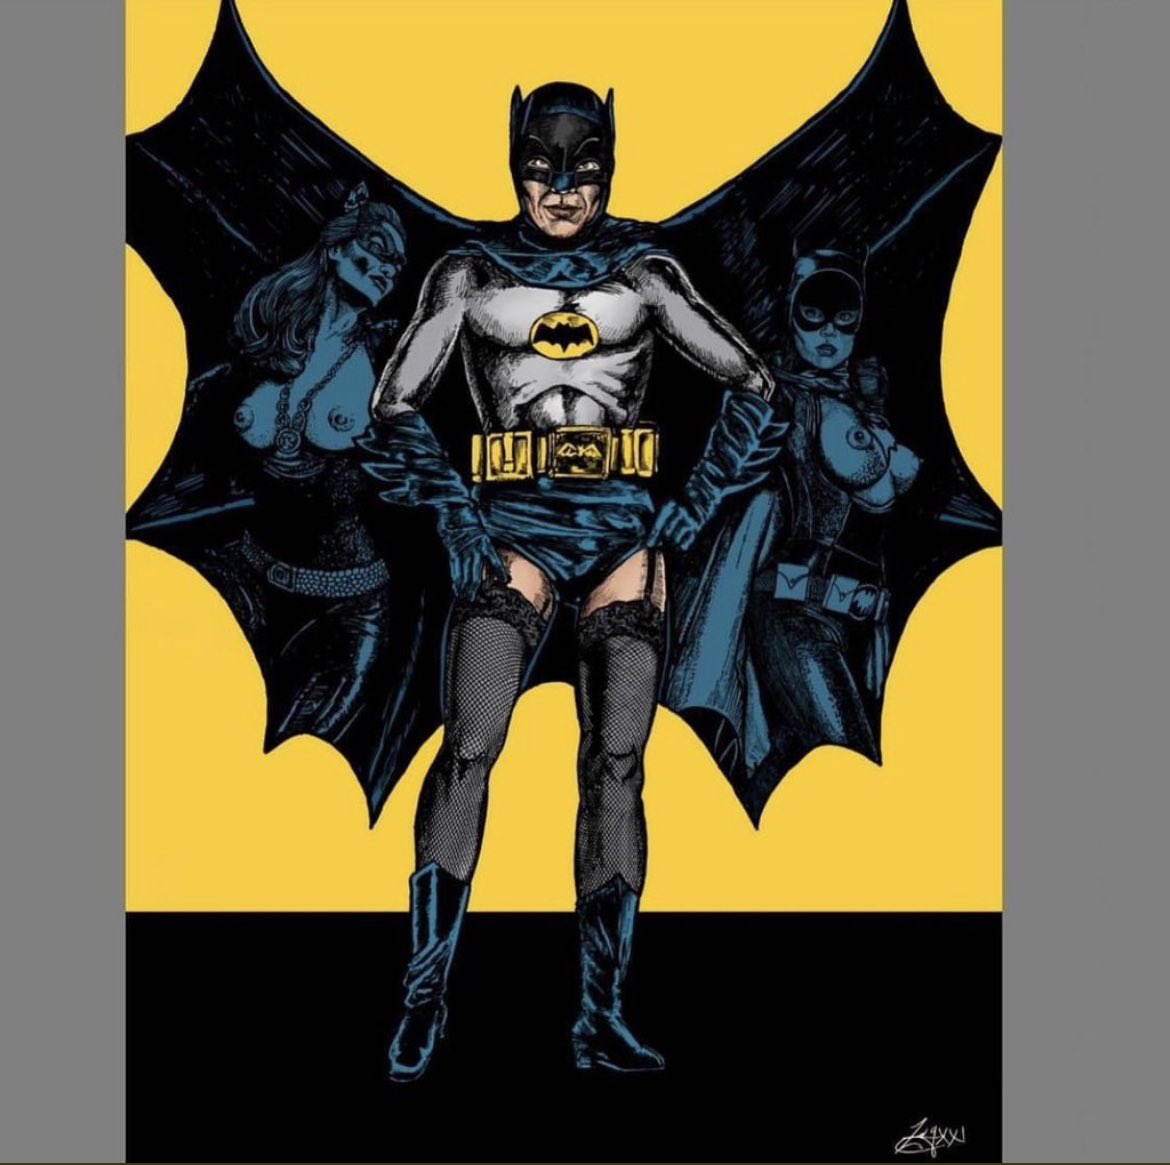 I’ll have you know - I was drawing #BatMan in ladies #undergarments before it was cool. 
.
#comic #comics #TheFlashMovie #batbra #bra #dc #DCU @JamesGunn #benafleck #comix #movies #superheromovie @DCComics @CBR